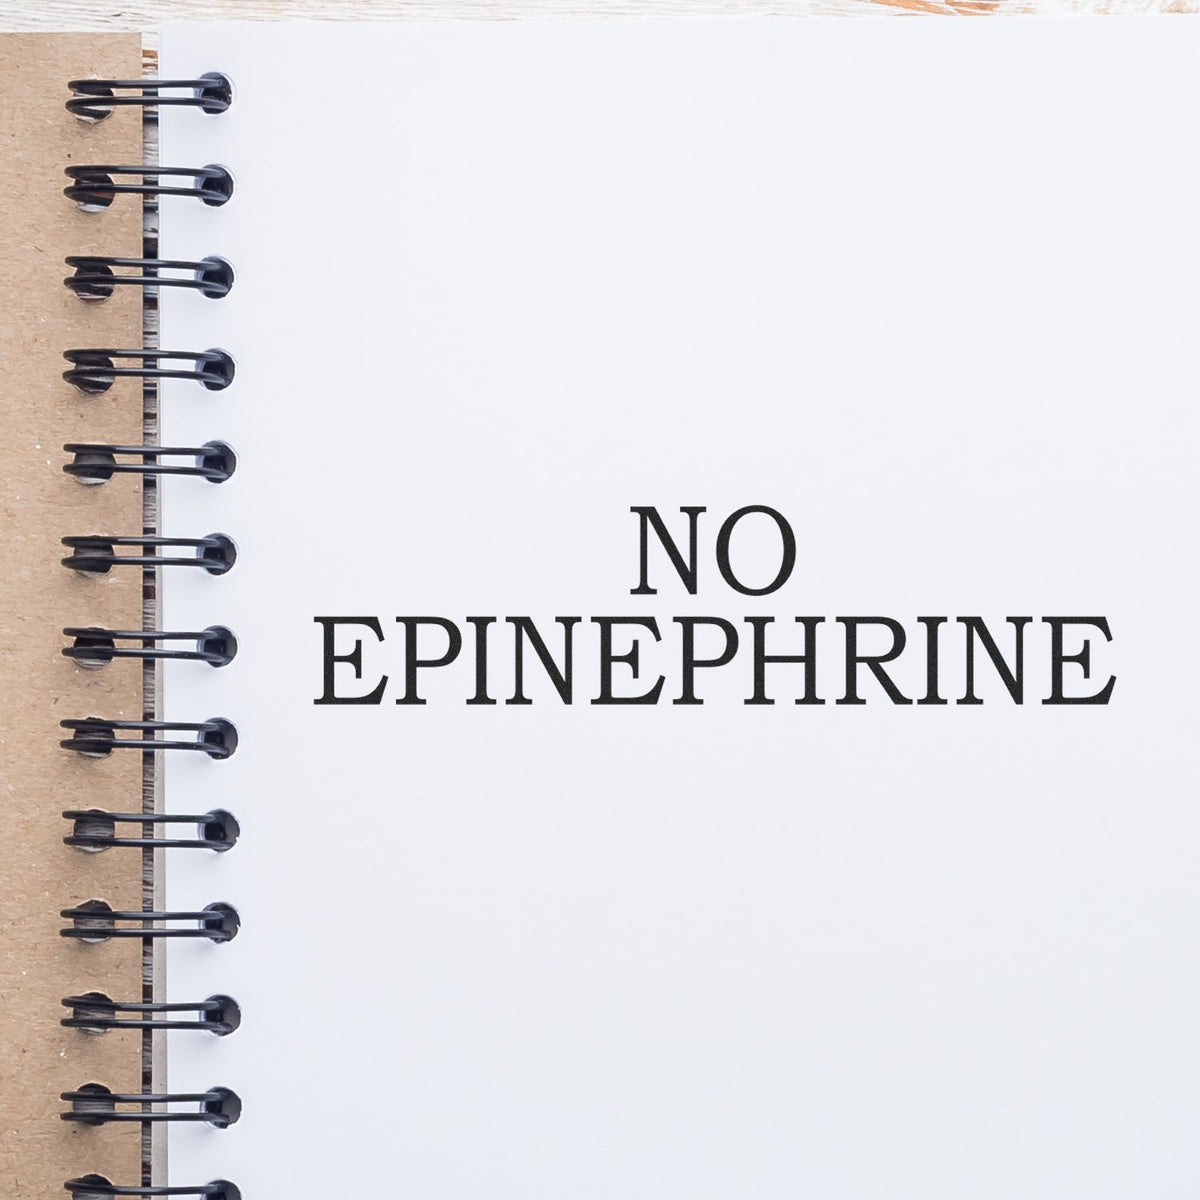 No Epinephrine Medical Rubber Stamp Lifestyle Photo